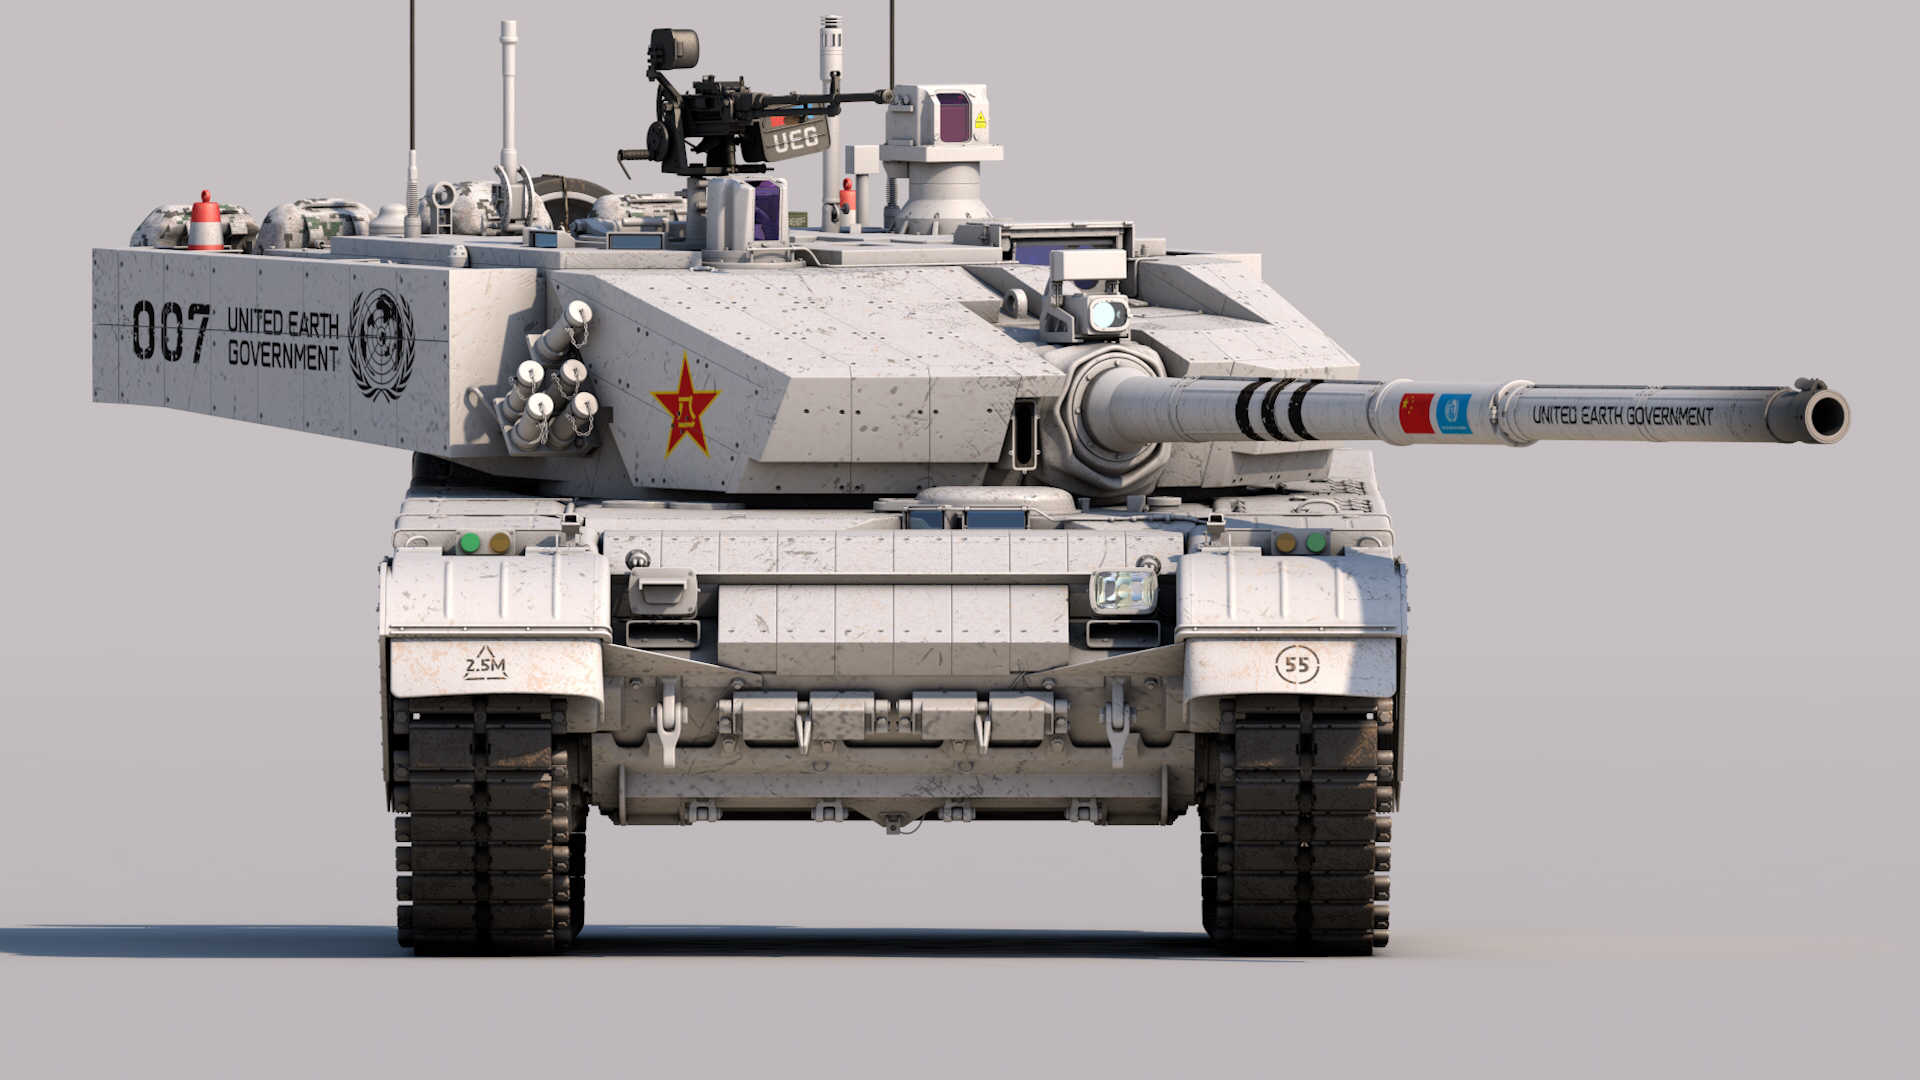 99A TANK The Wandering Earth Ii Military Vehicle Artwork Simple Background Tank Minimalism Digital A 1920x1080